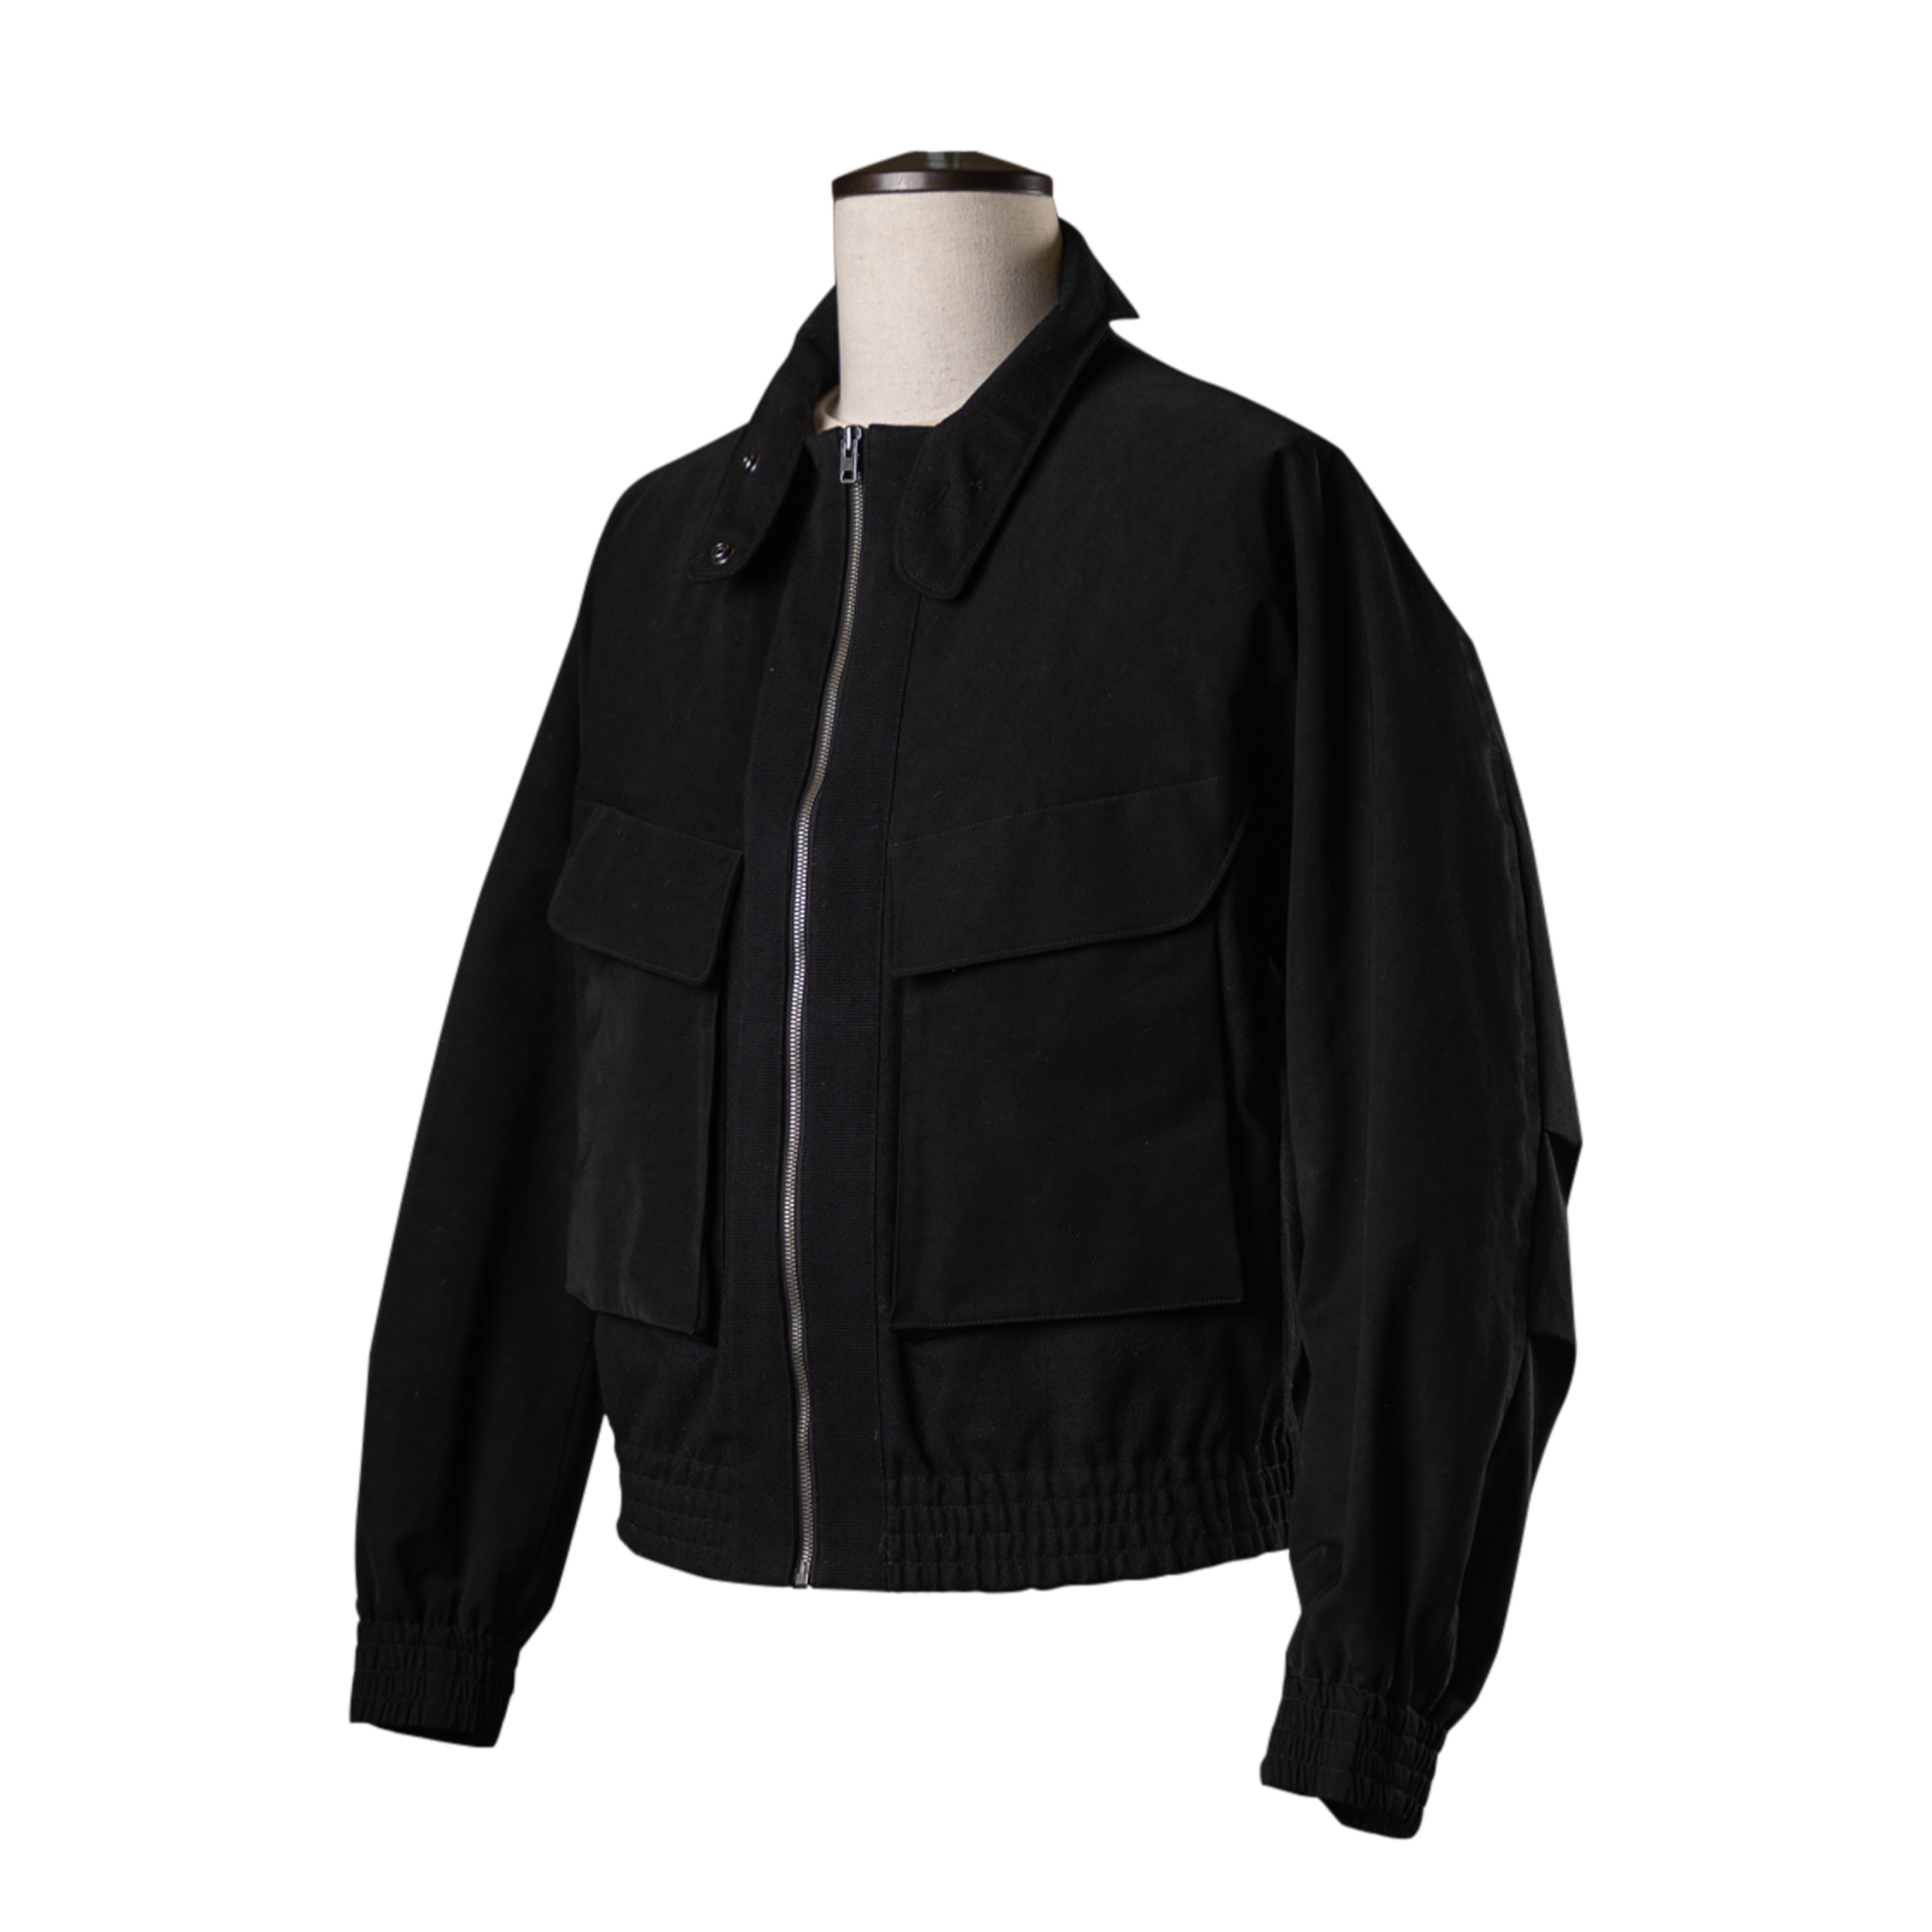 MotivMfg - Pelican Jacket (Black)